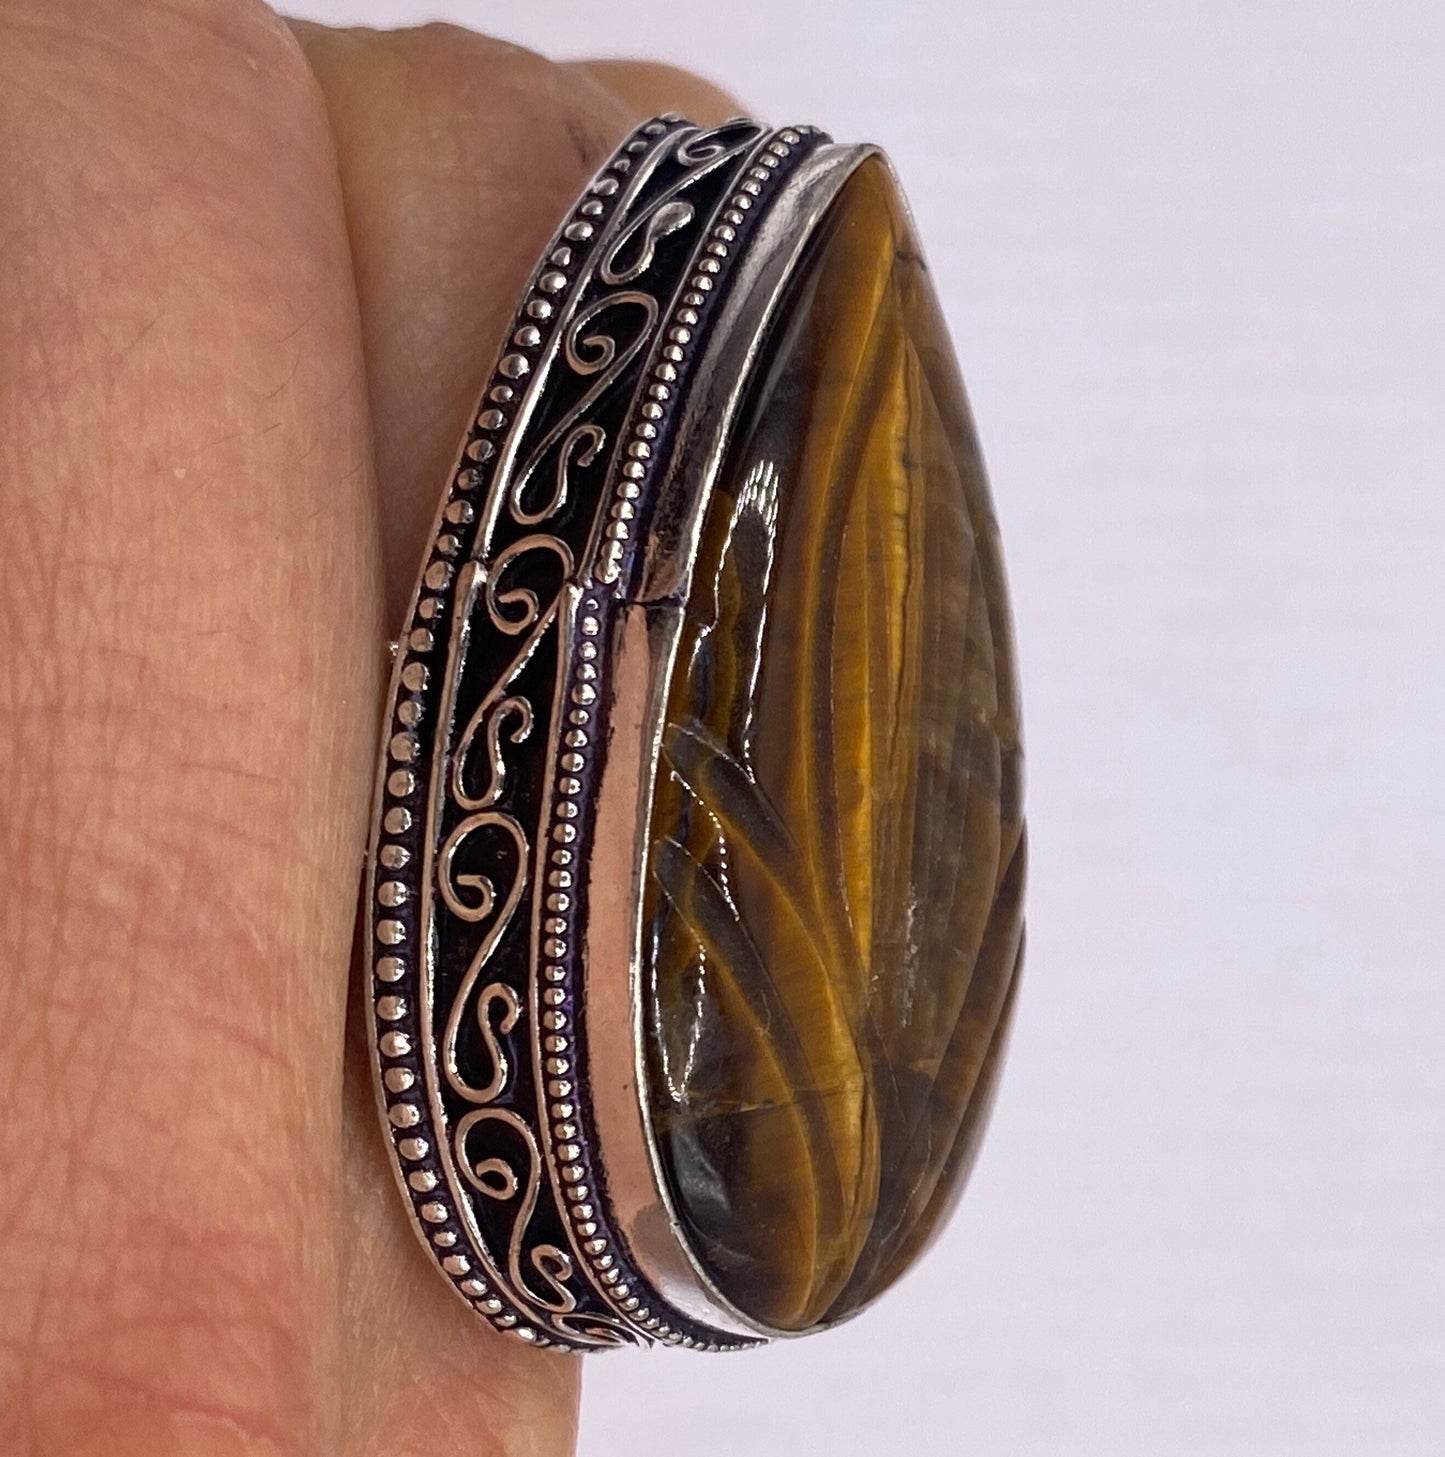 Vintage Tigers Eye Stone Silver Ring